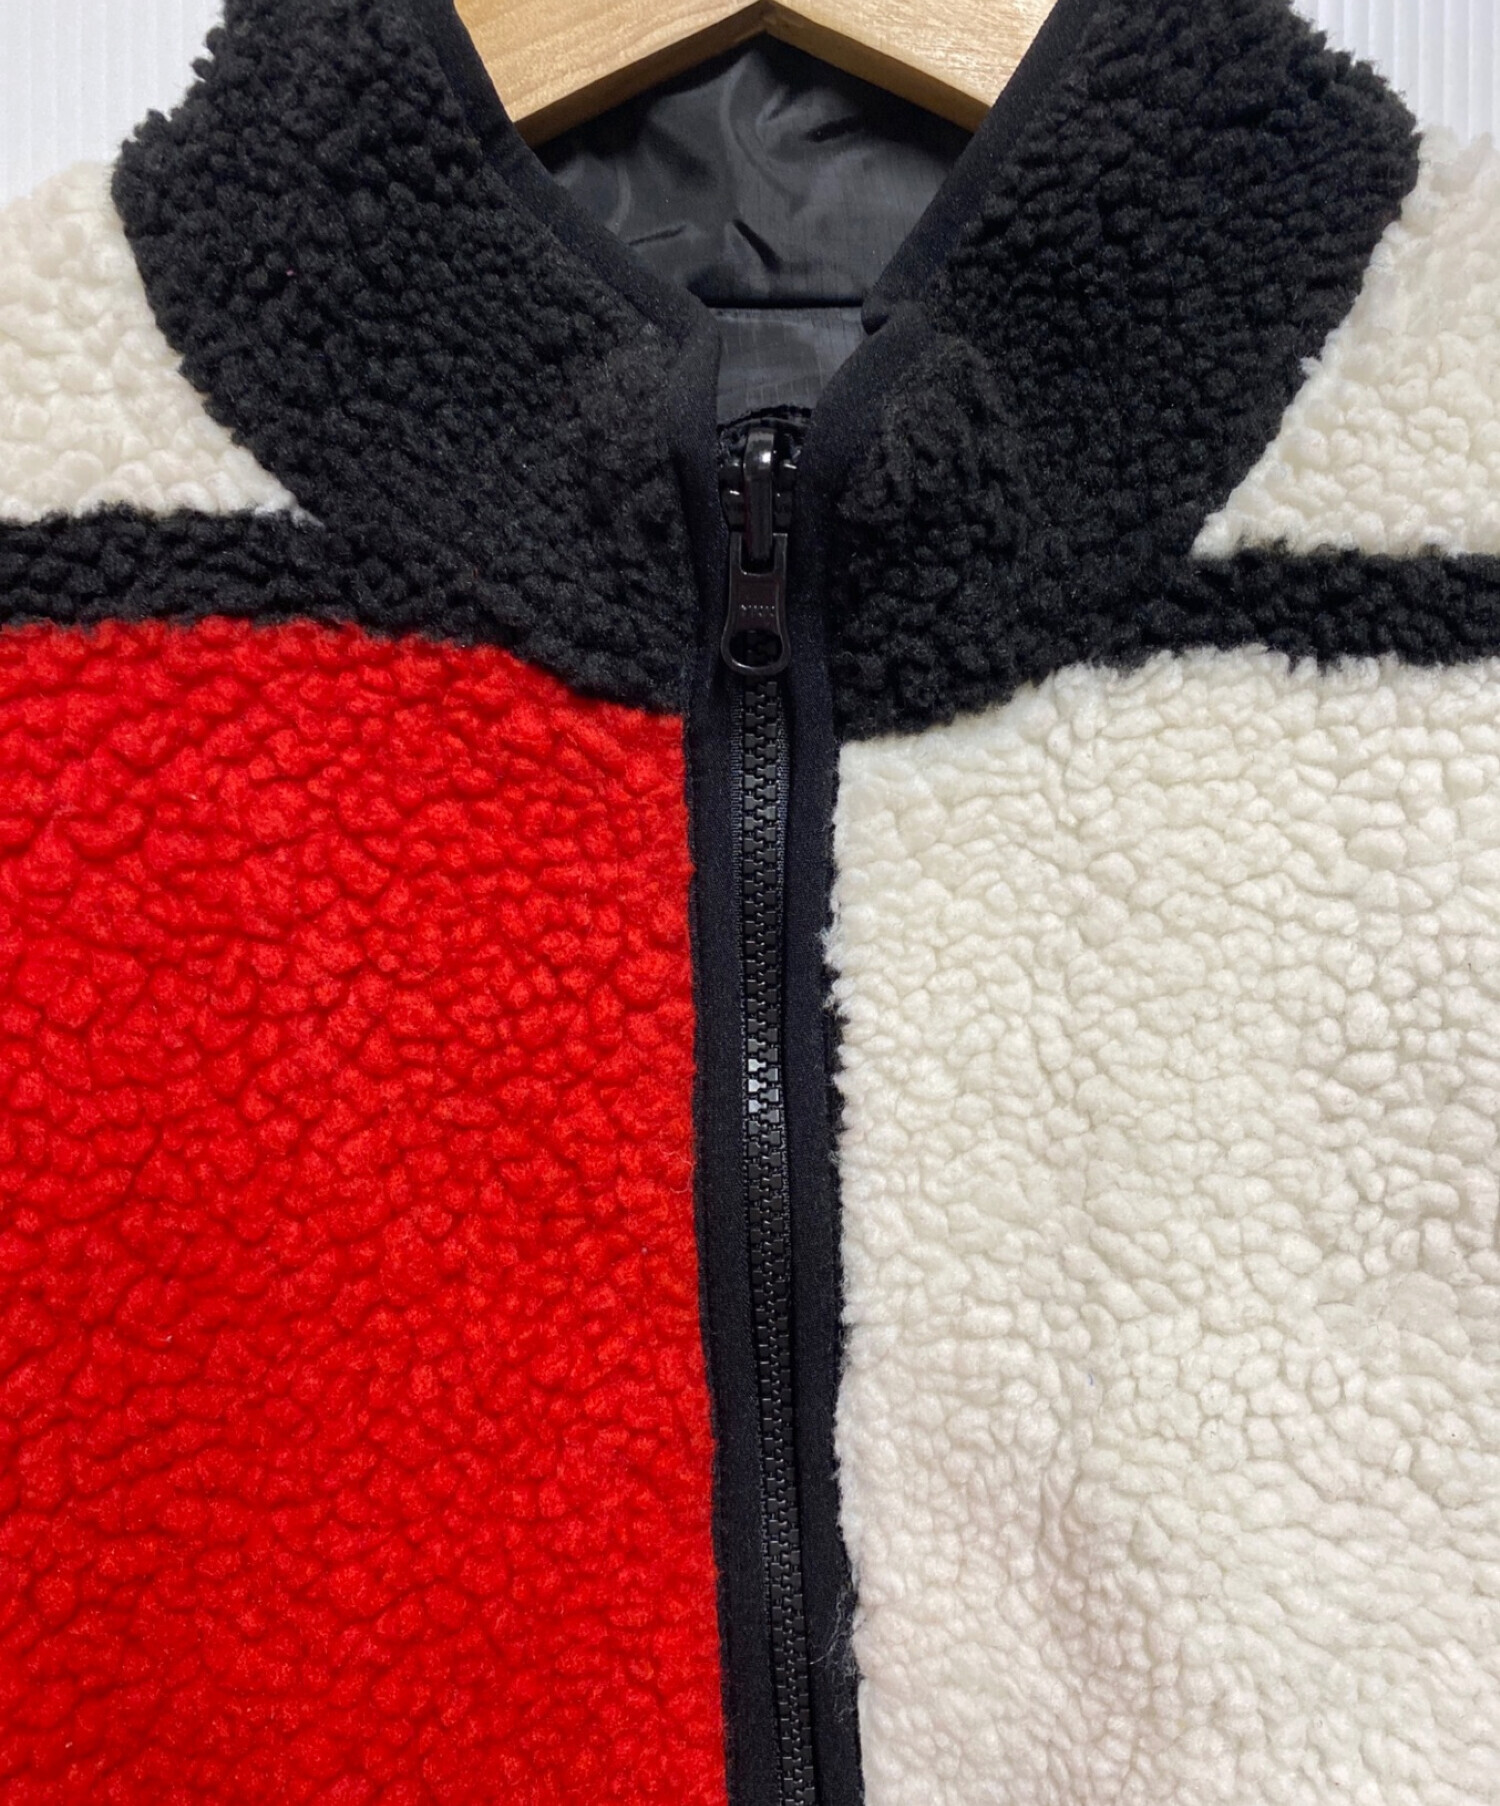 SUPREME (シュプリーム) Reversible Colorblocked Fleece Jacket マルチカラー サイズ:L